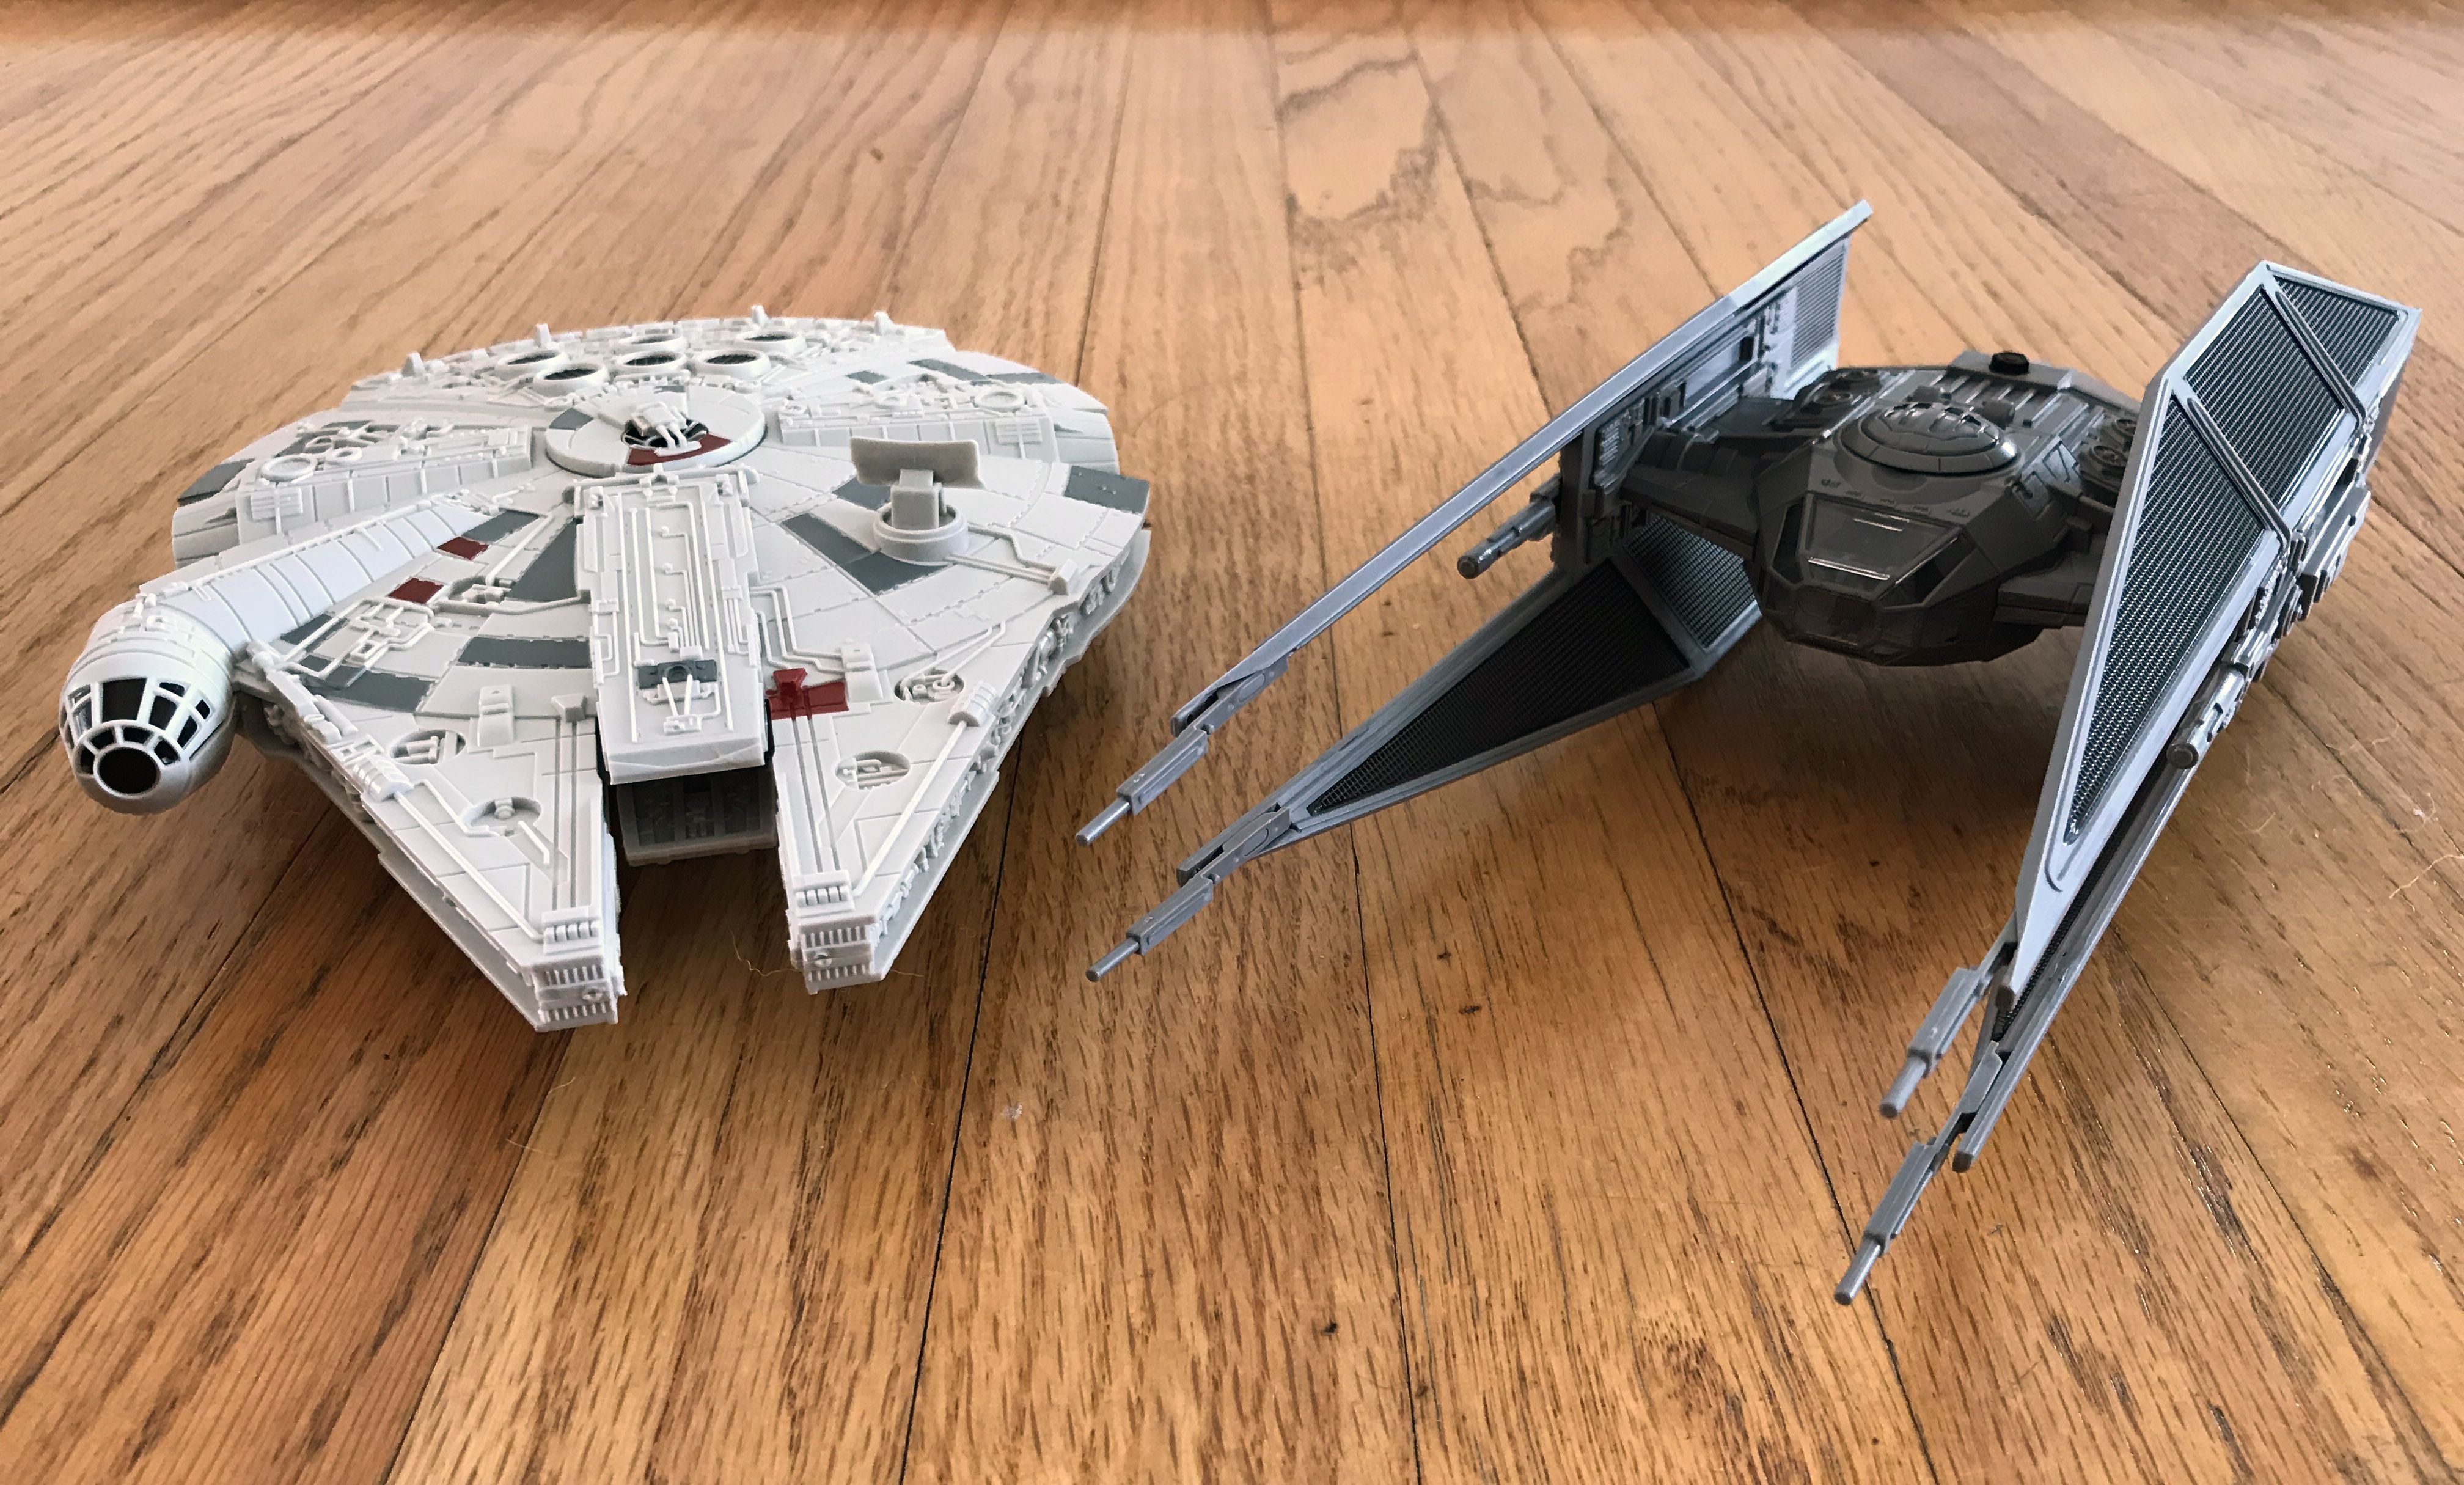 Cardboard Model Star Wars